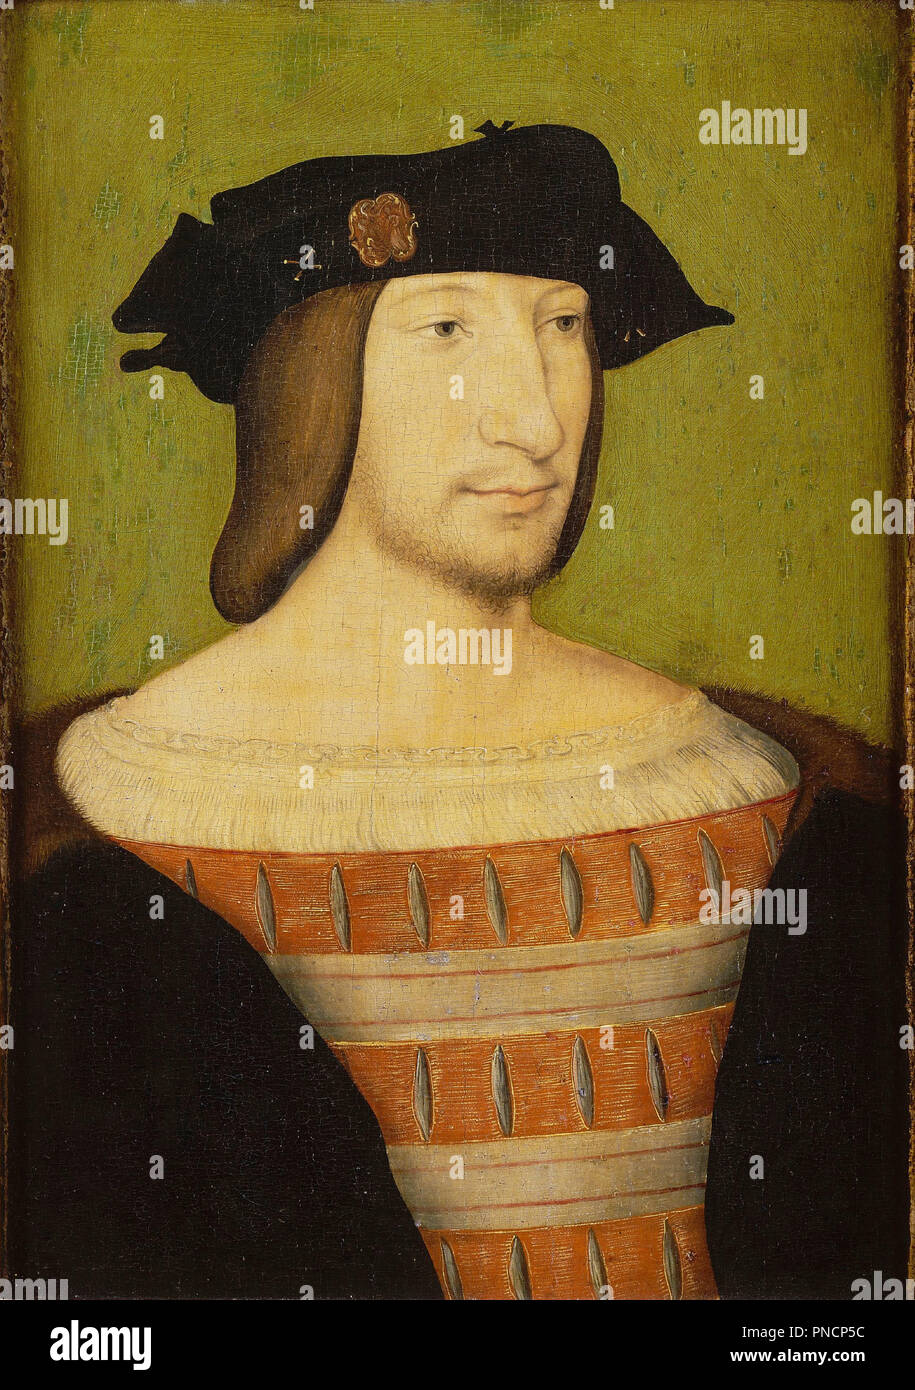 Portrait de François Ier (1494-1547), roi de France. Date/Period: Ca. 1515. Painting. Oil on panel. Height: 350 mm (13.77 in); Width: 250 mm (9.84 in). Author: JEAN CLOUET. CLOUET, JEAN. Stock Photo